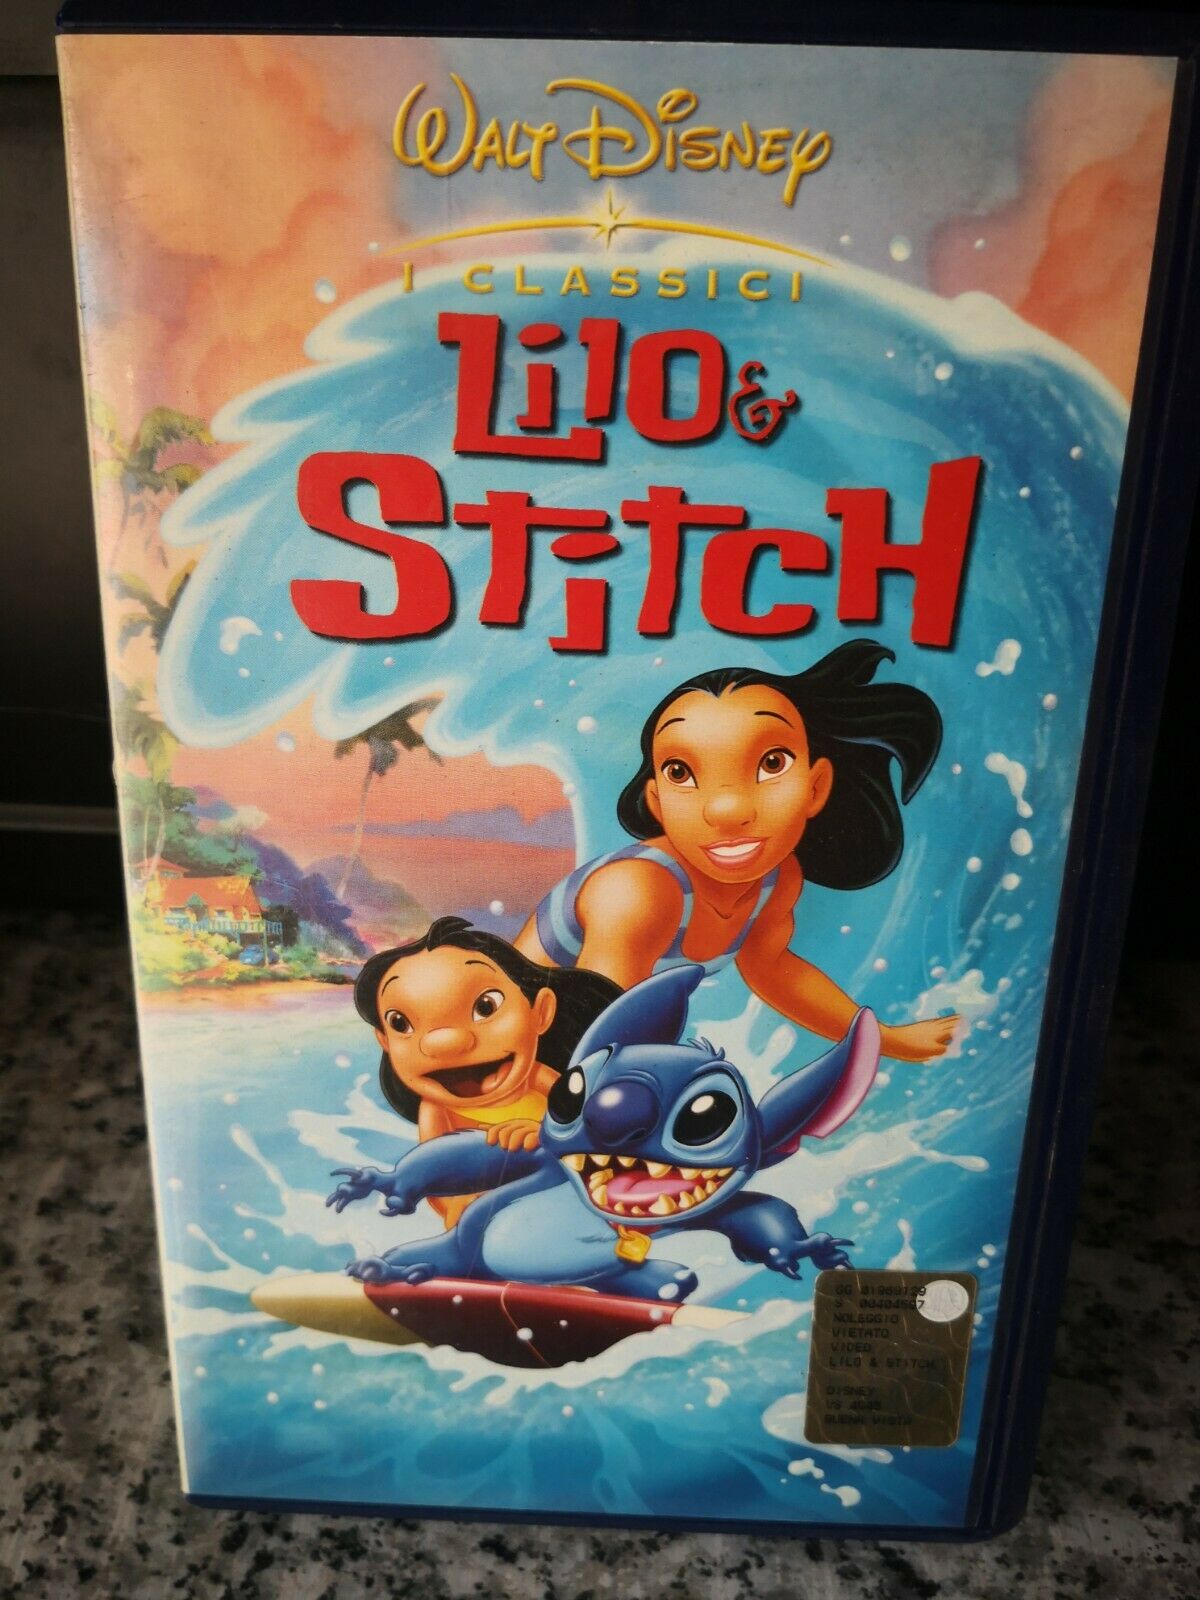 Lilo e Stitch - vhs - 2002 - Walt Disney -F